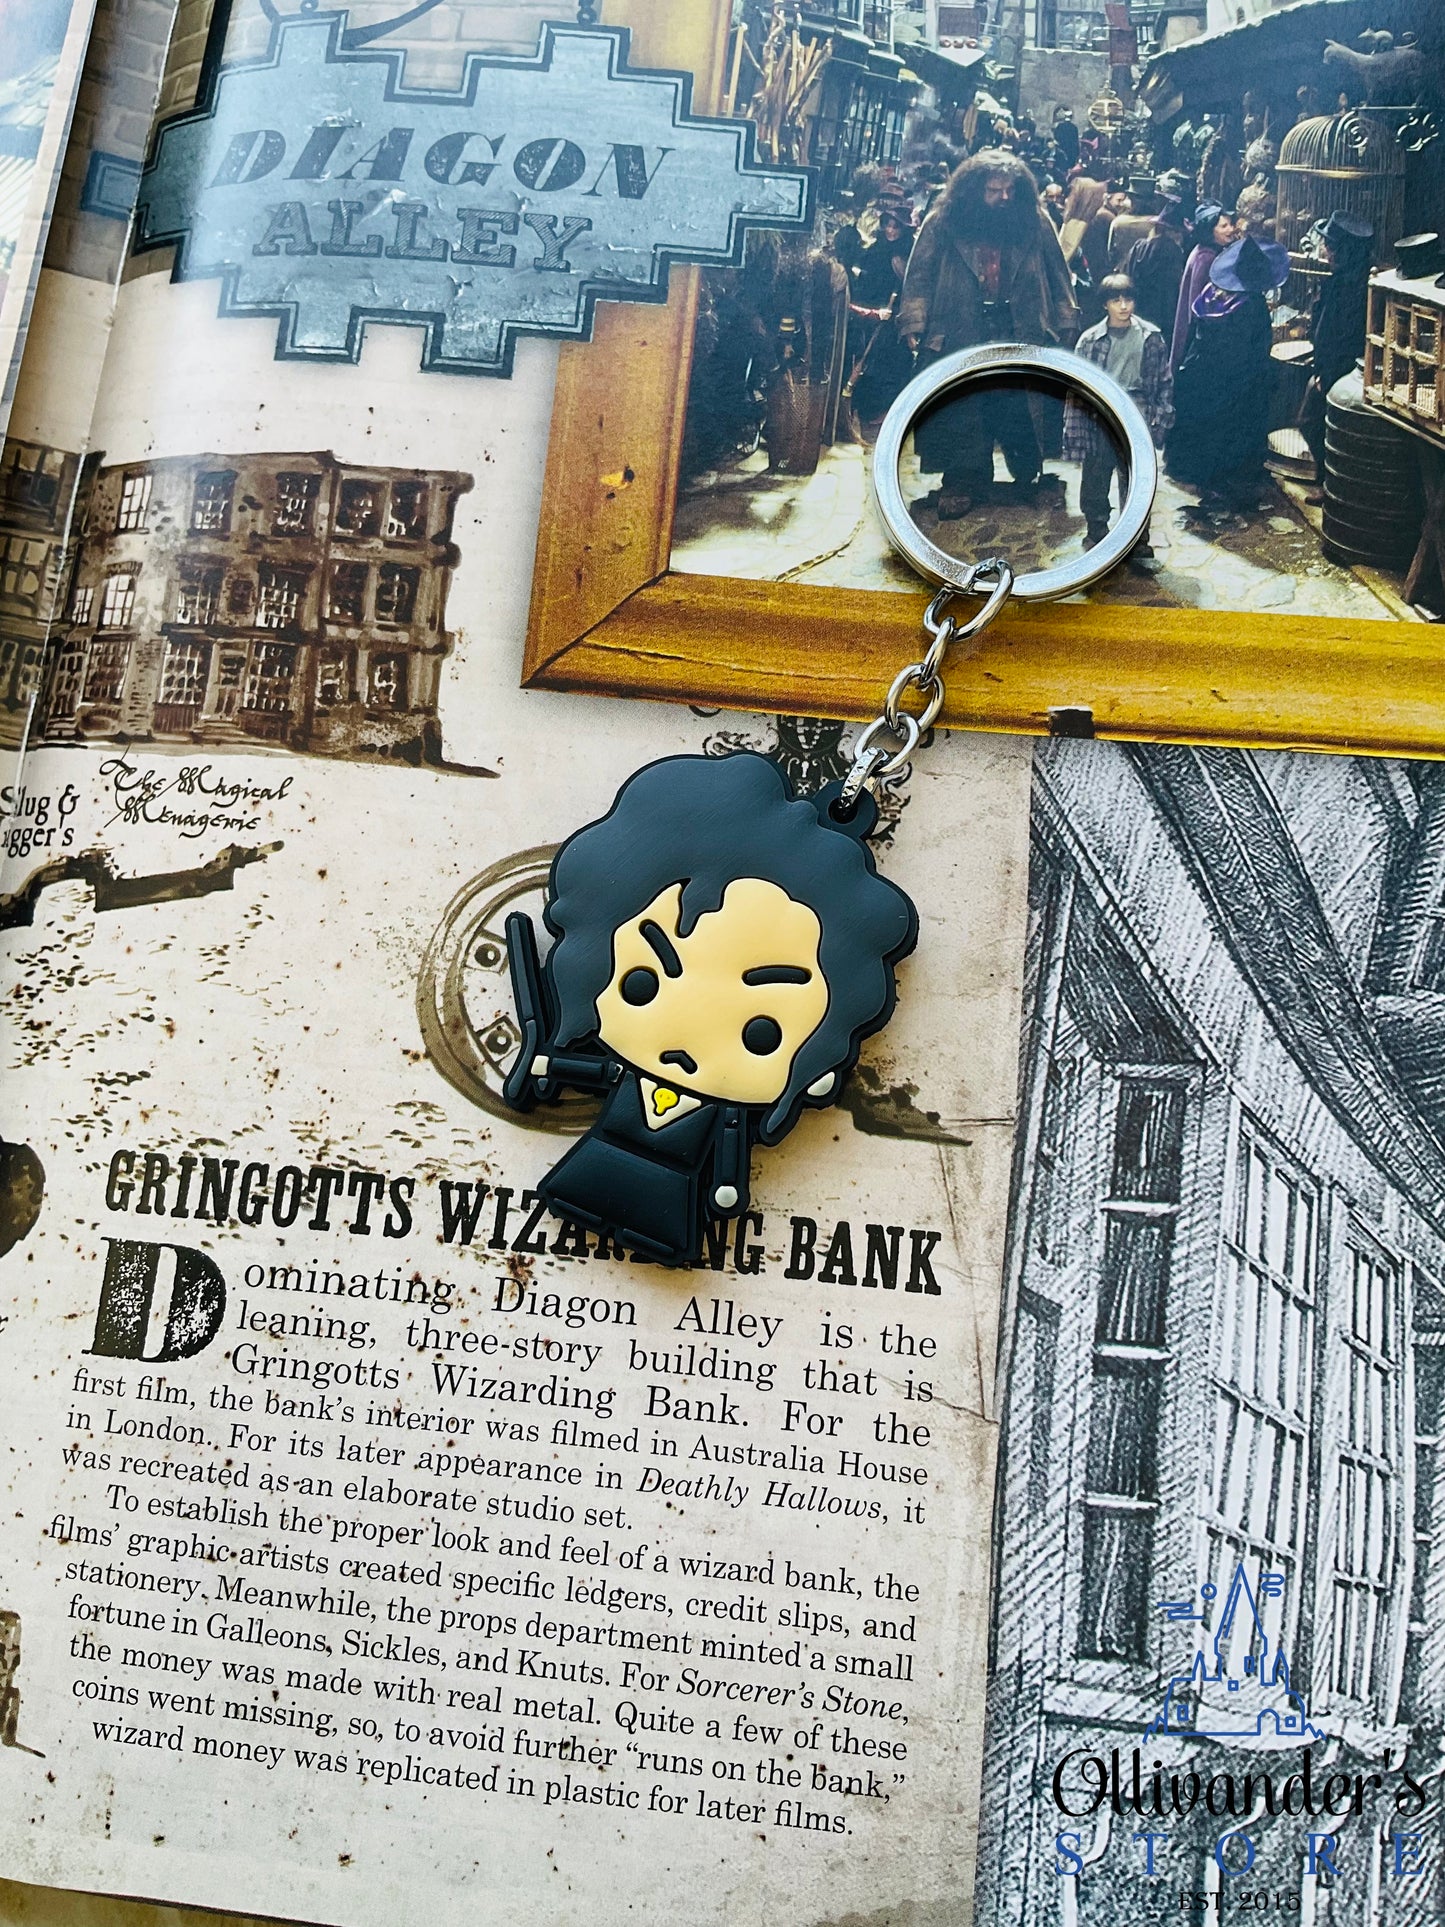 Bellatrix Lestrange's Keychain